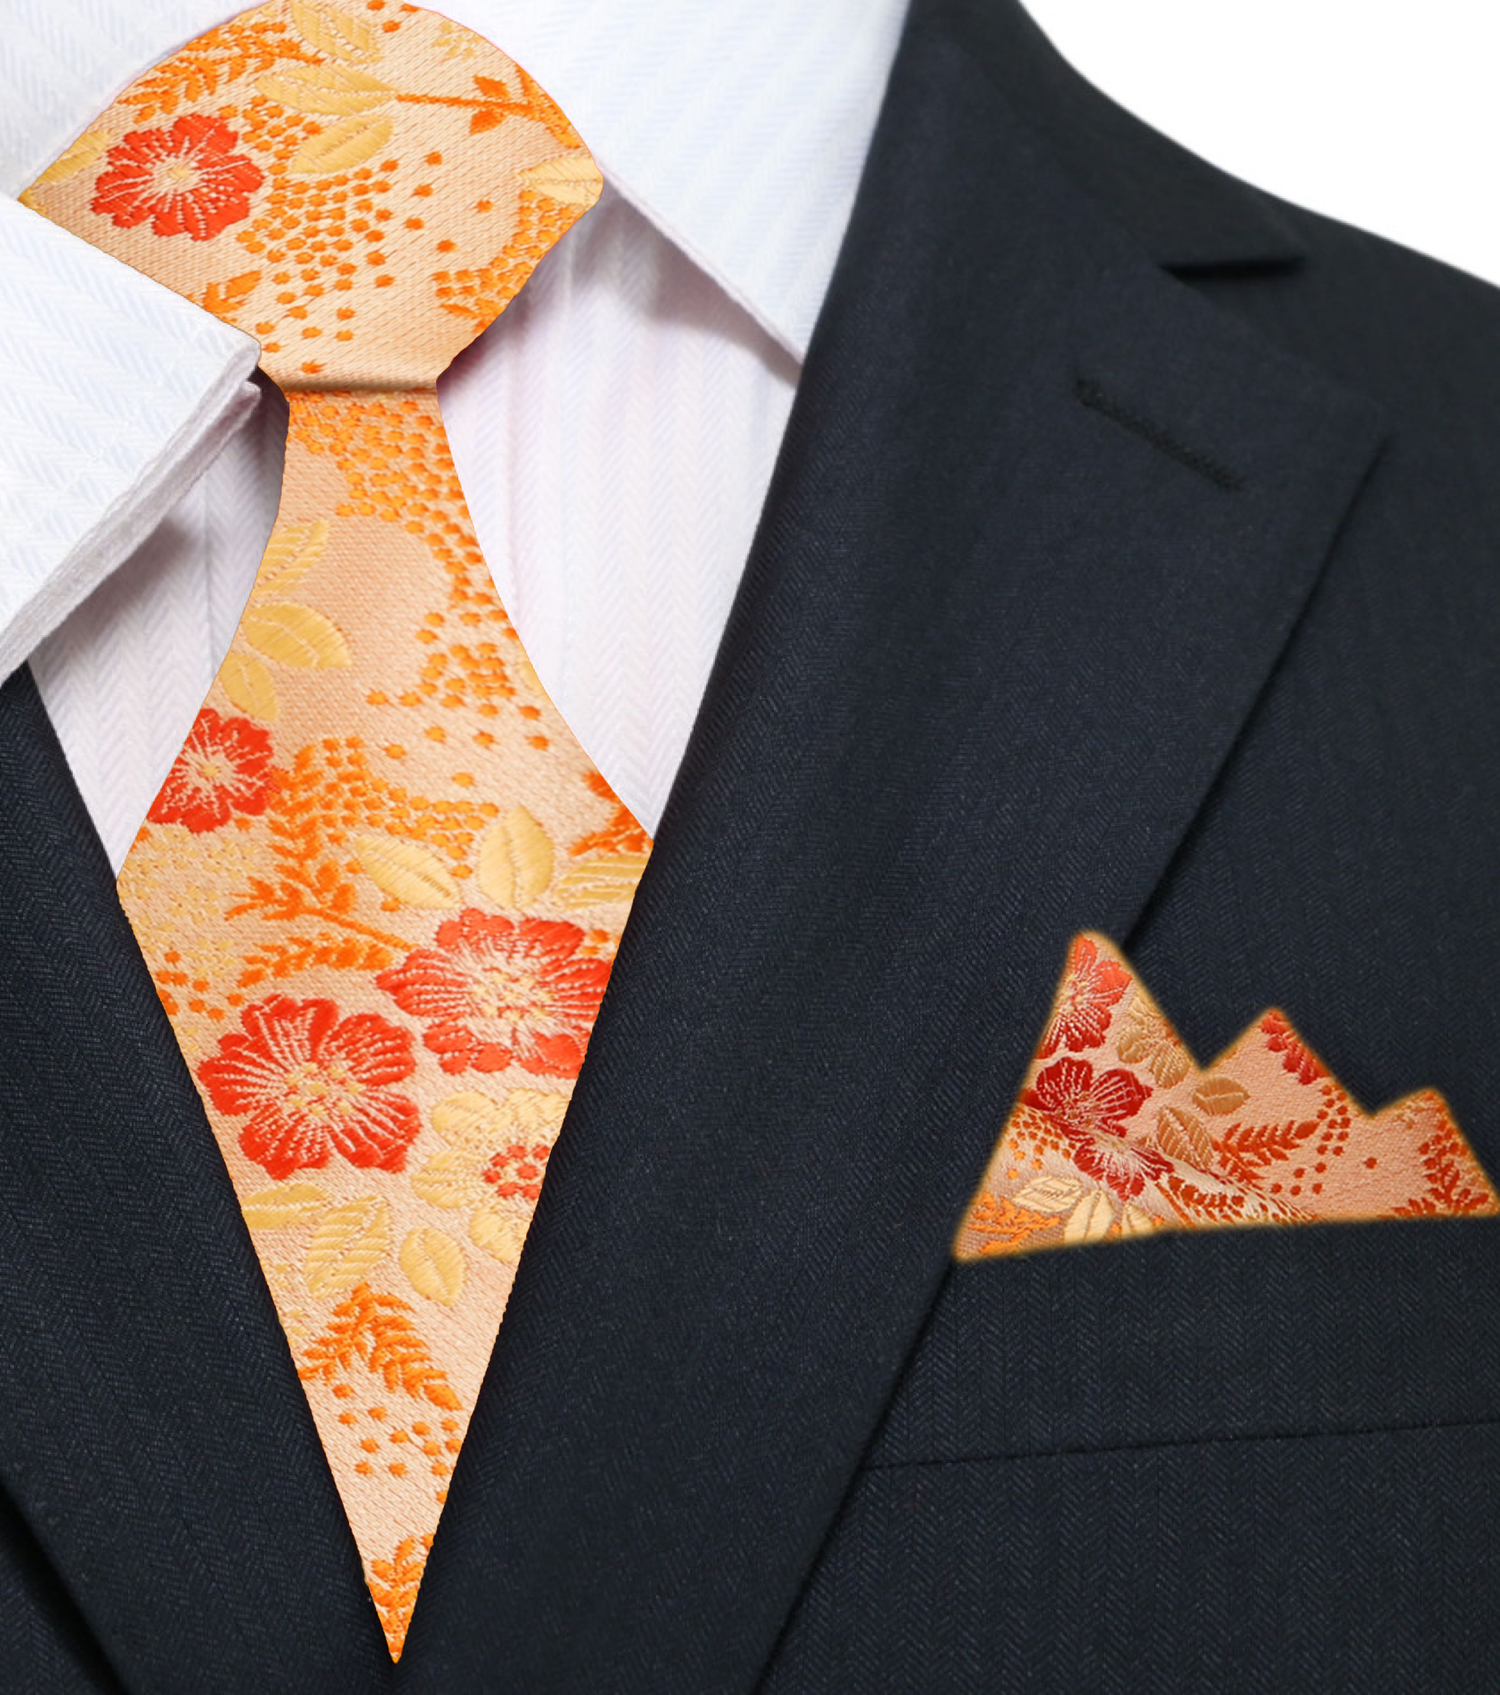 Main:A Light Orange, Orange Floral Pattern Necktie With Matching Pocket Square